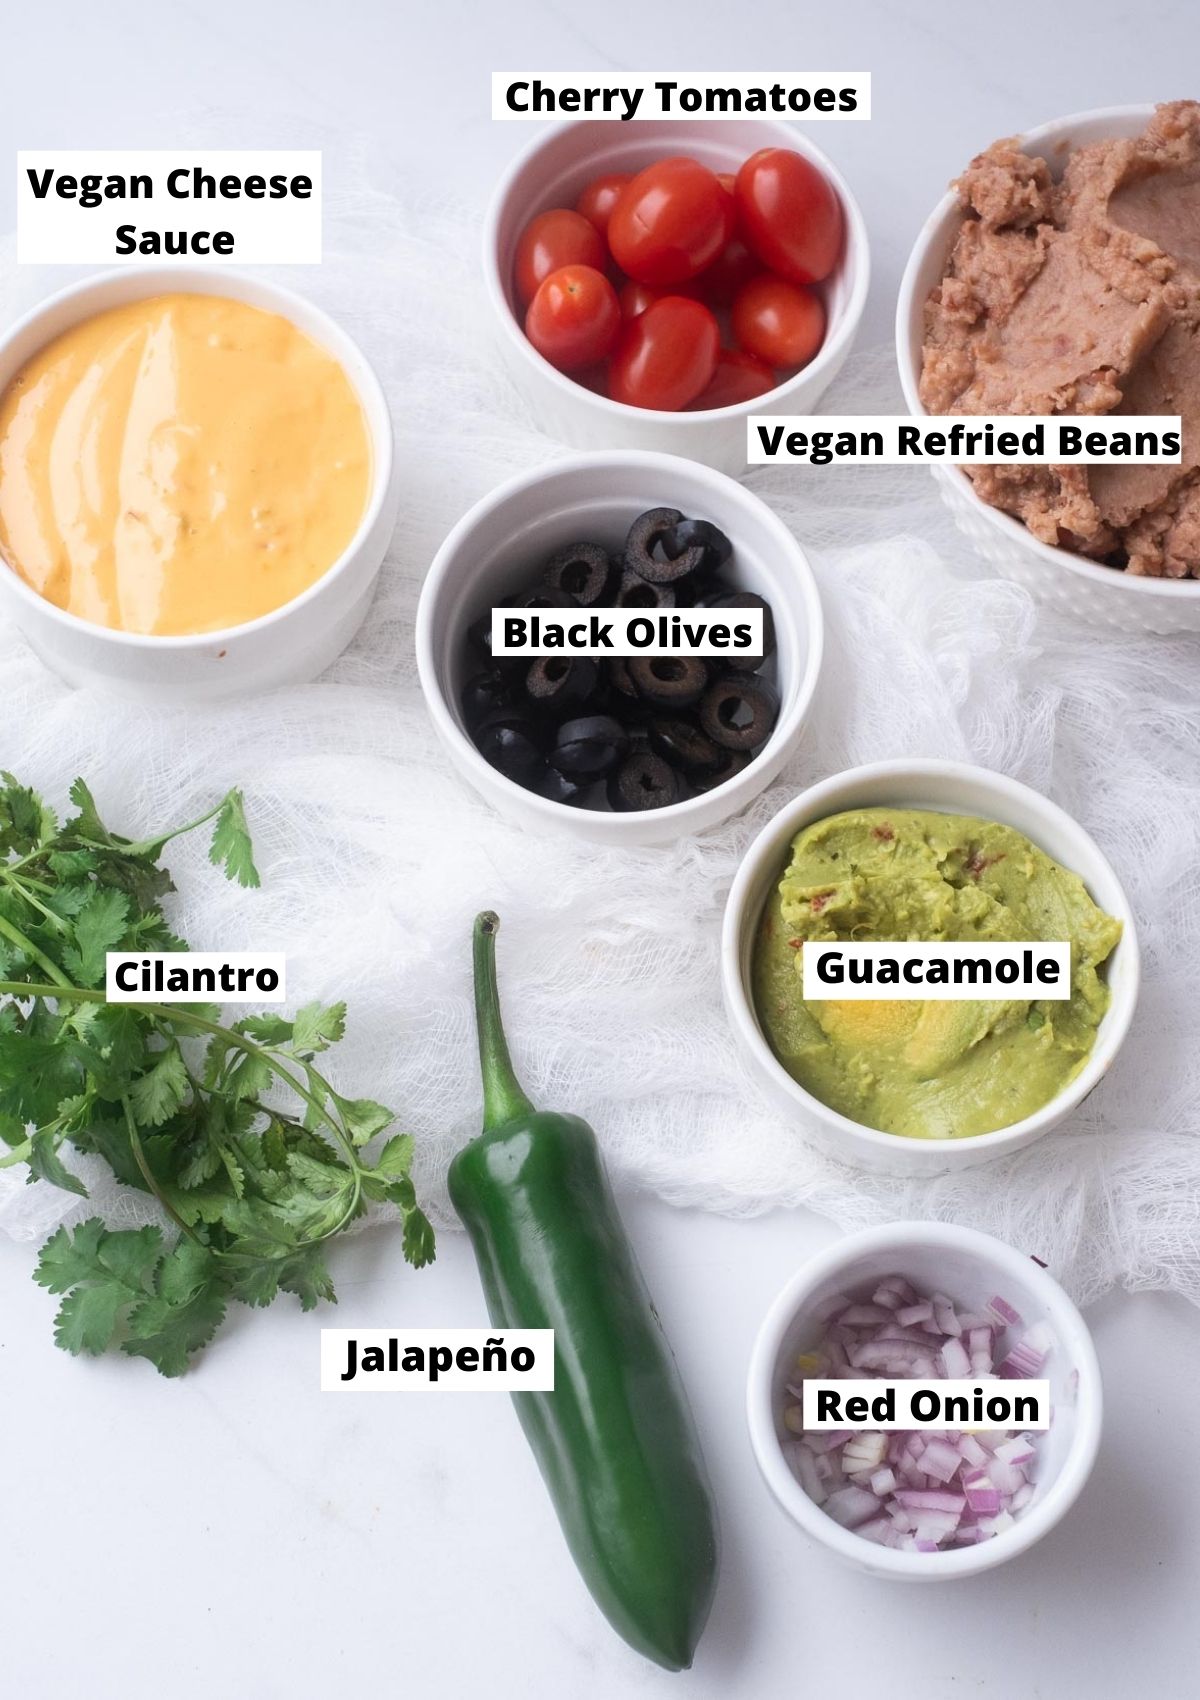 Vegan 7 Layer Dip Ingredients: Refried beans, guacamole, vegan cheese sauce, onions, jalapeño, black olives, cherry tomatoes.